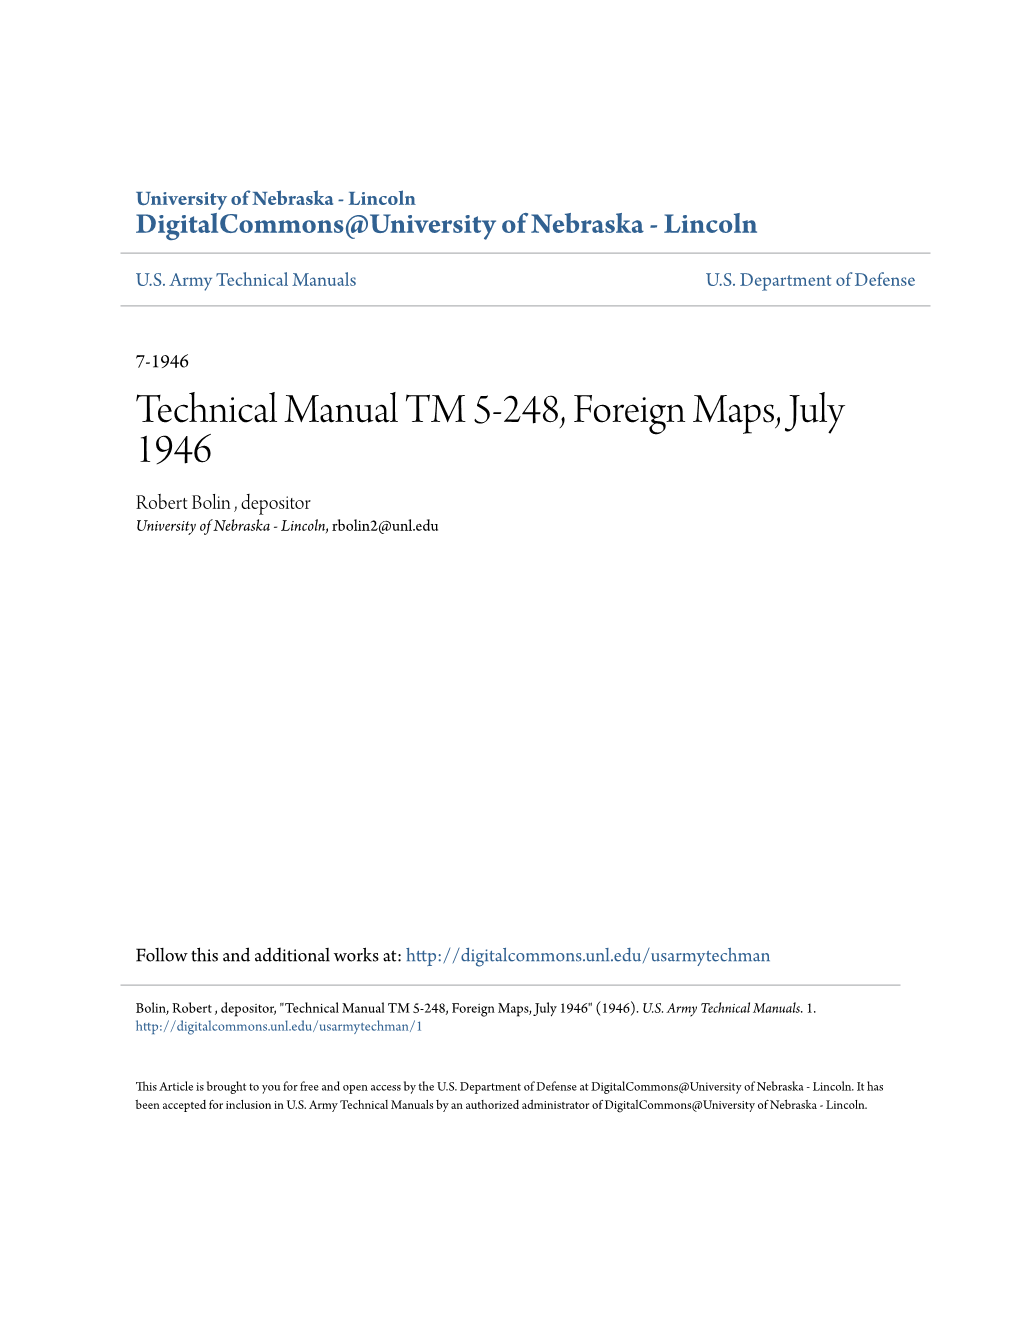 Technical Manual TM 5-248, Foreign Maps, July 1946 Robert Bolin , Depositor University of Nebraska - Lincoln, Rbolin2@Unl.Edu